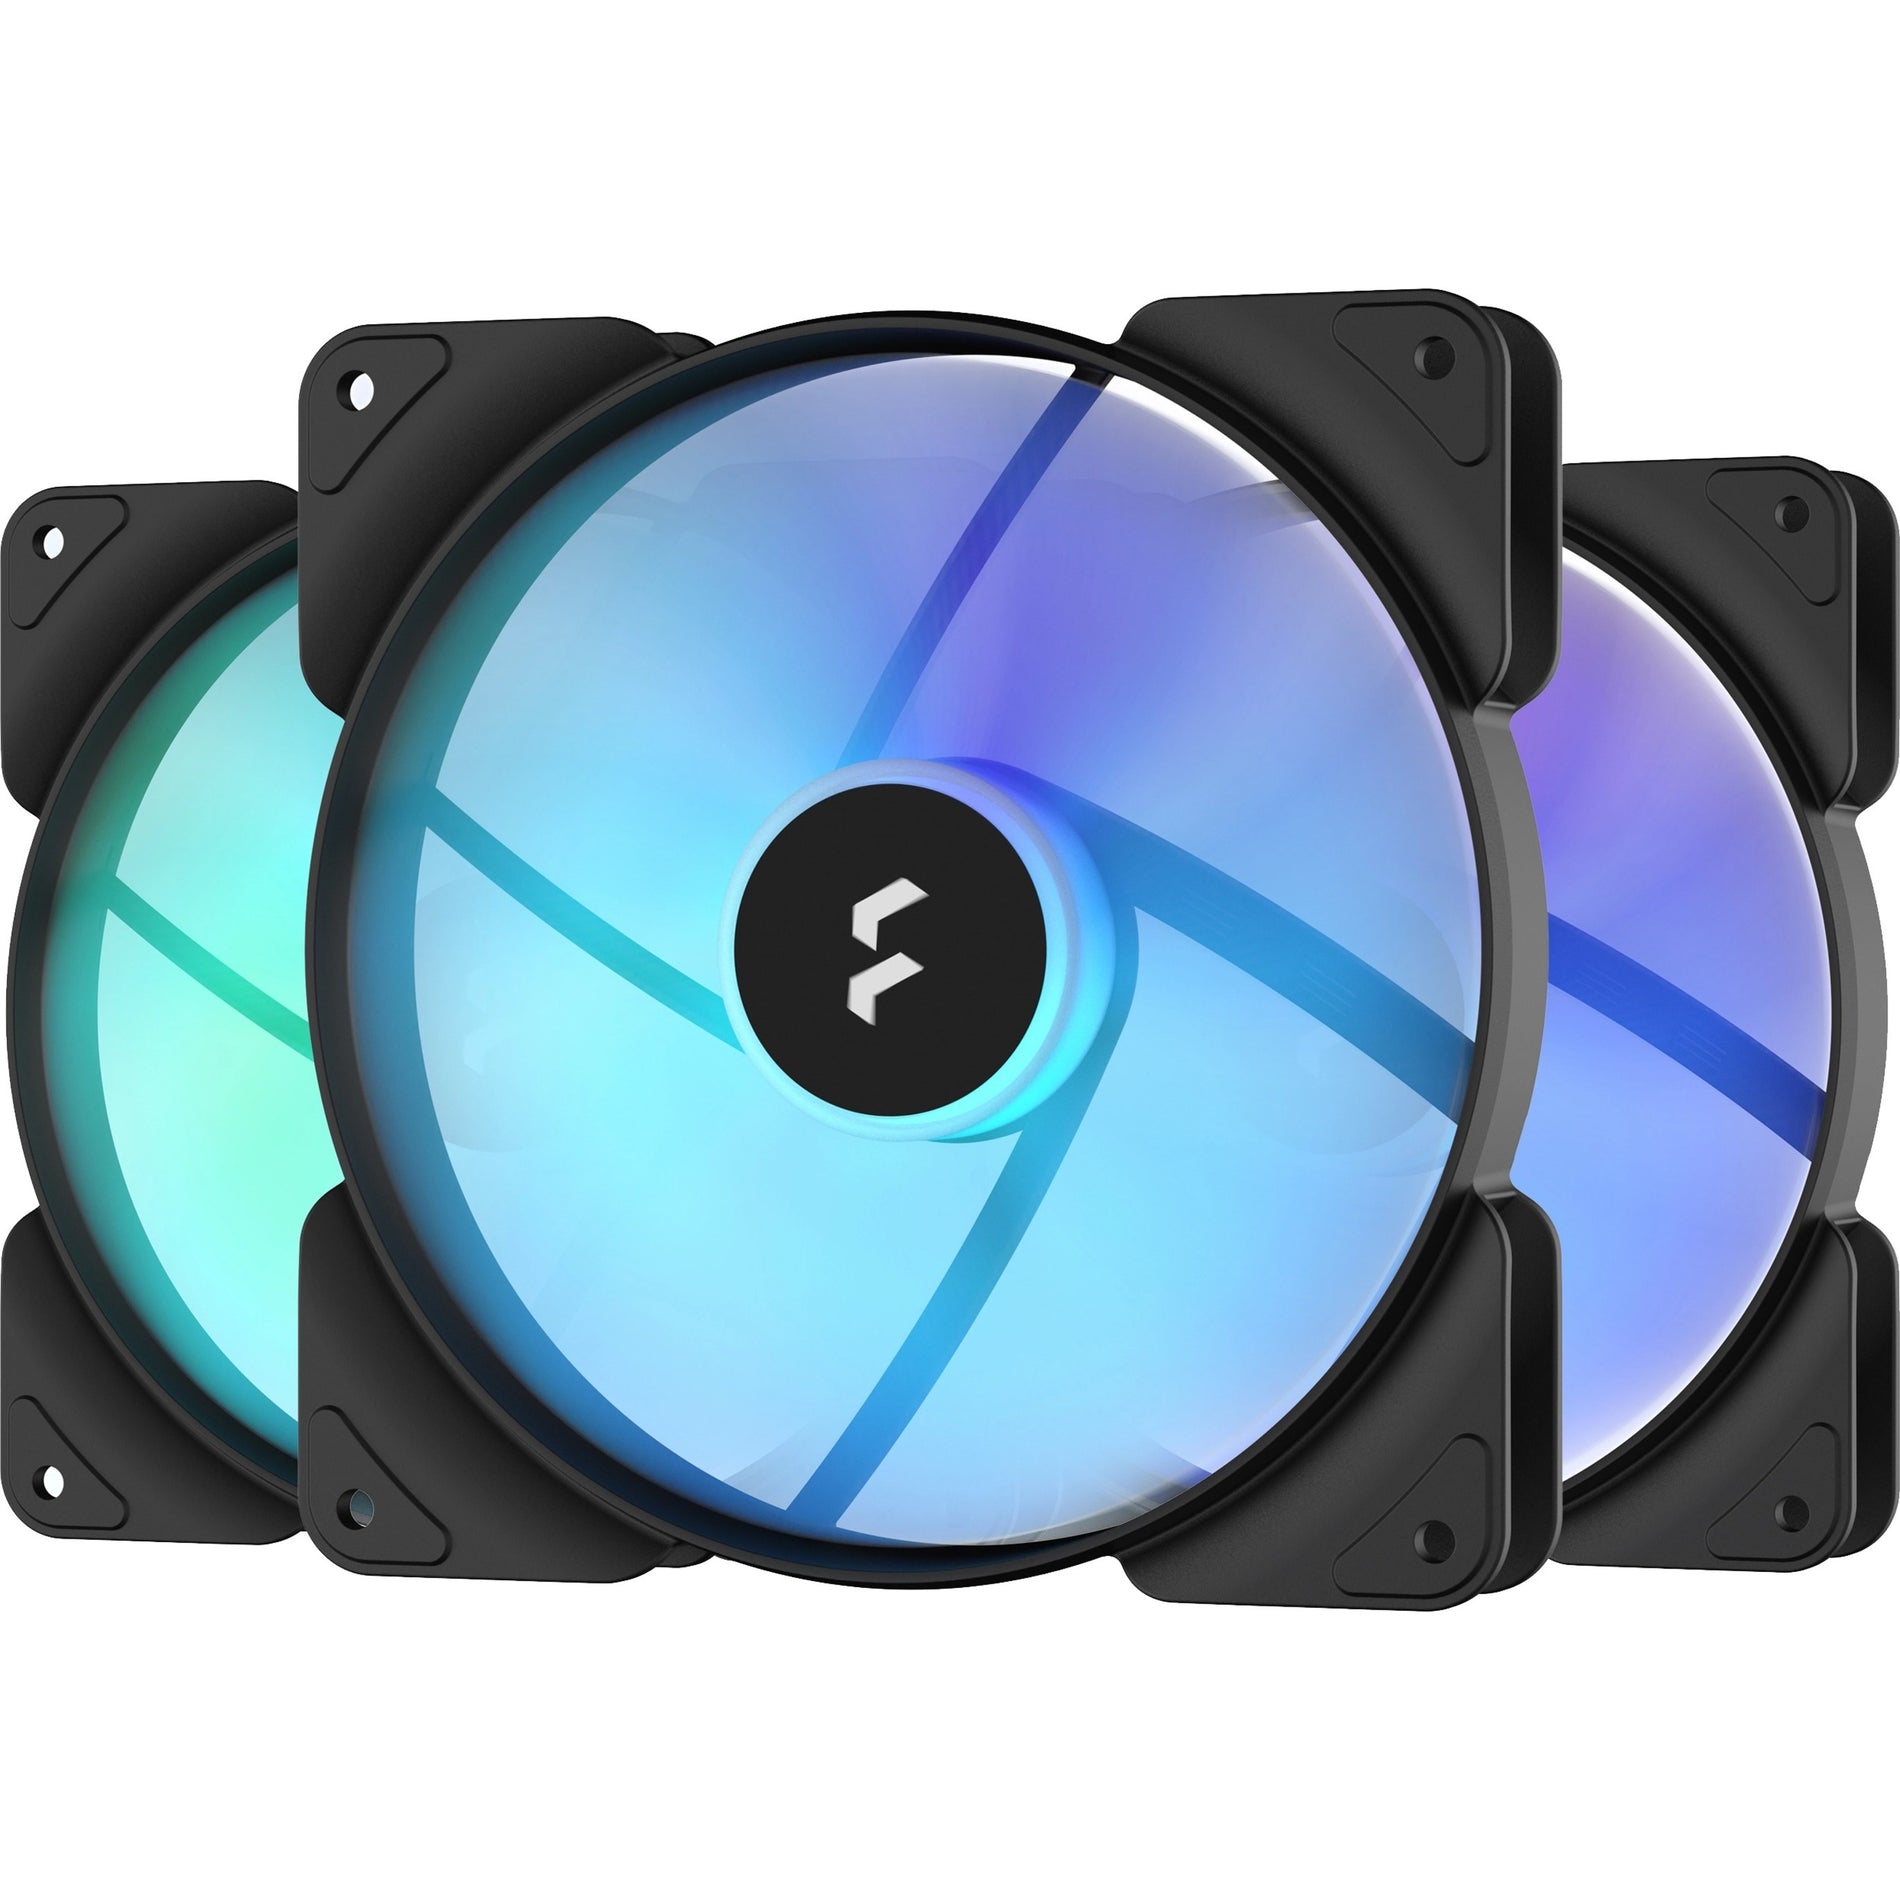 Ventilateur PC - FRACTAL DESIGN - Aspect 14 RGB Black Frame ( FD-F